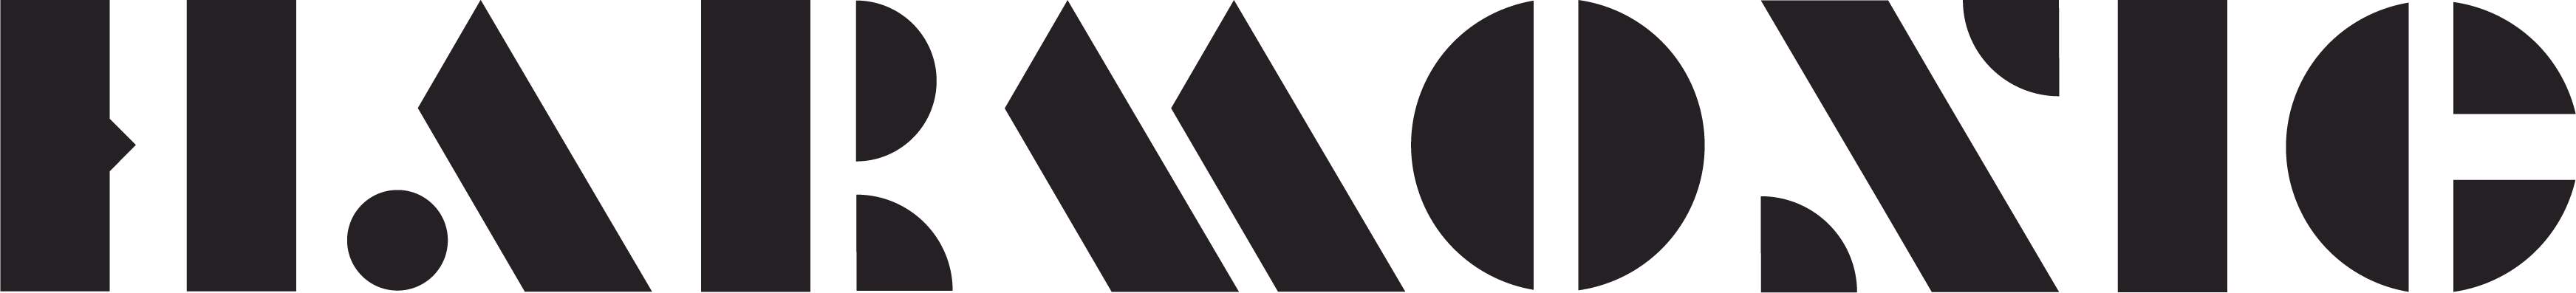 Harmonic Logo Wordmark